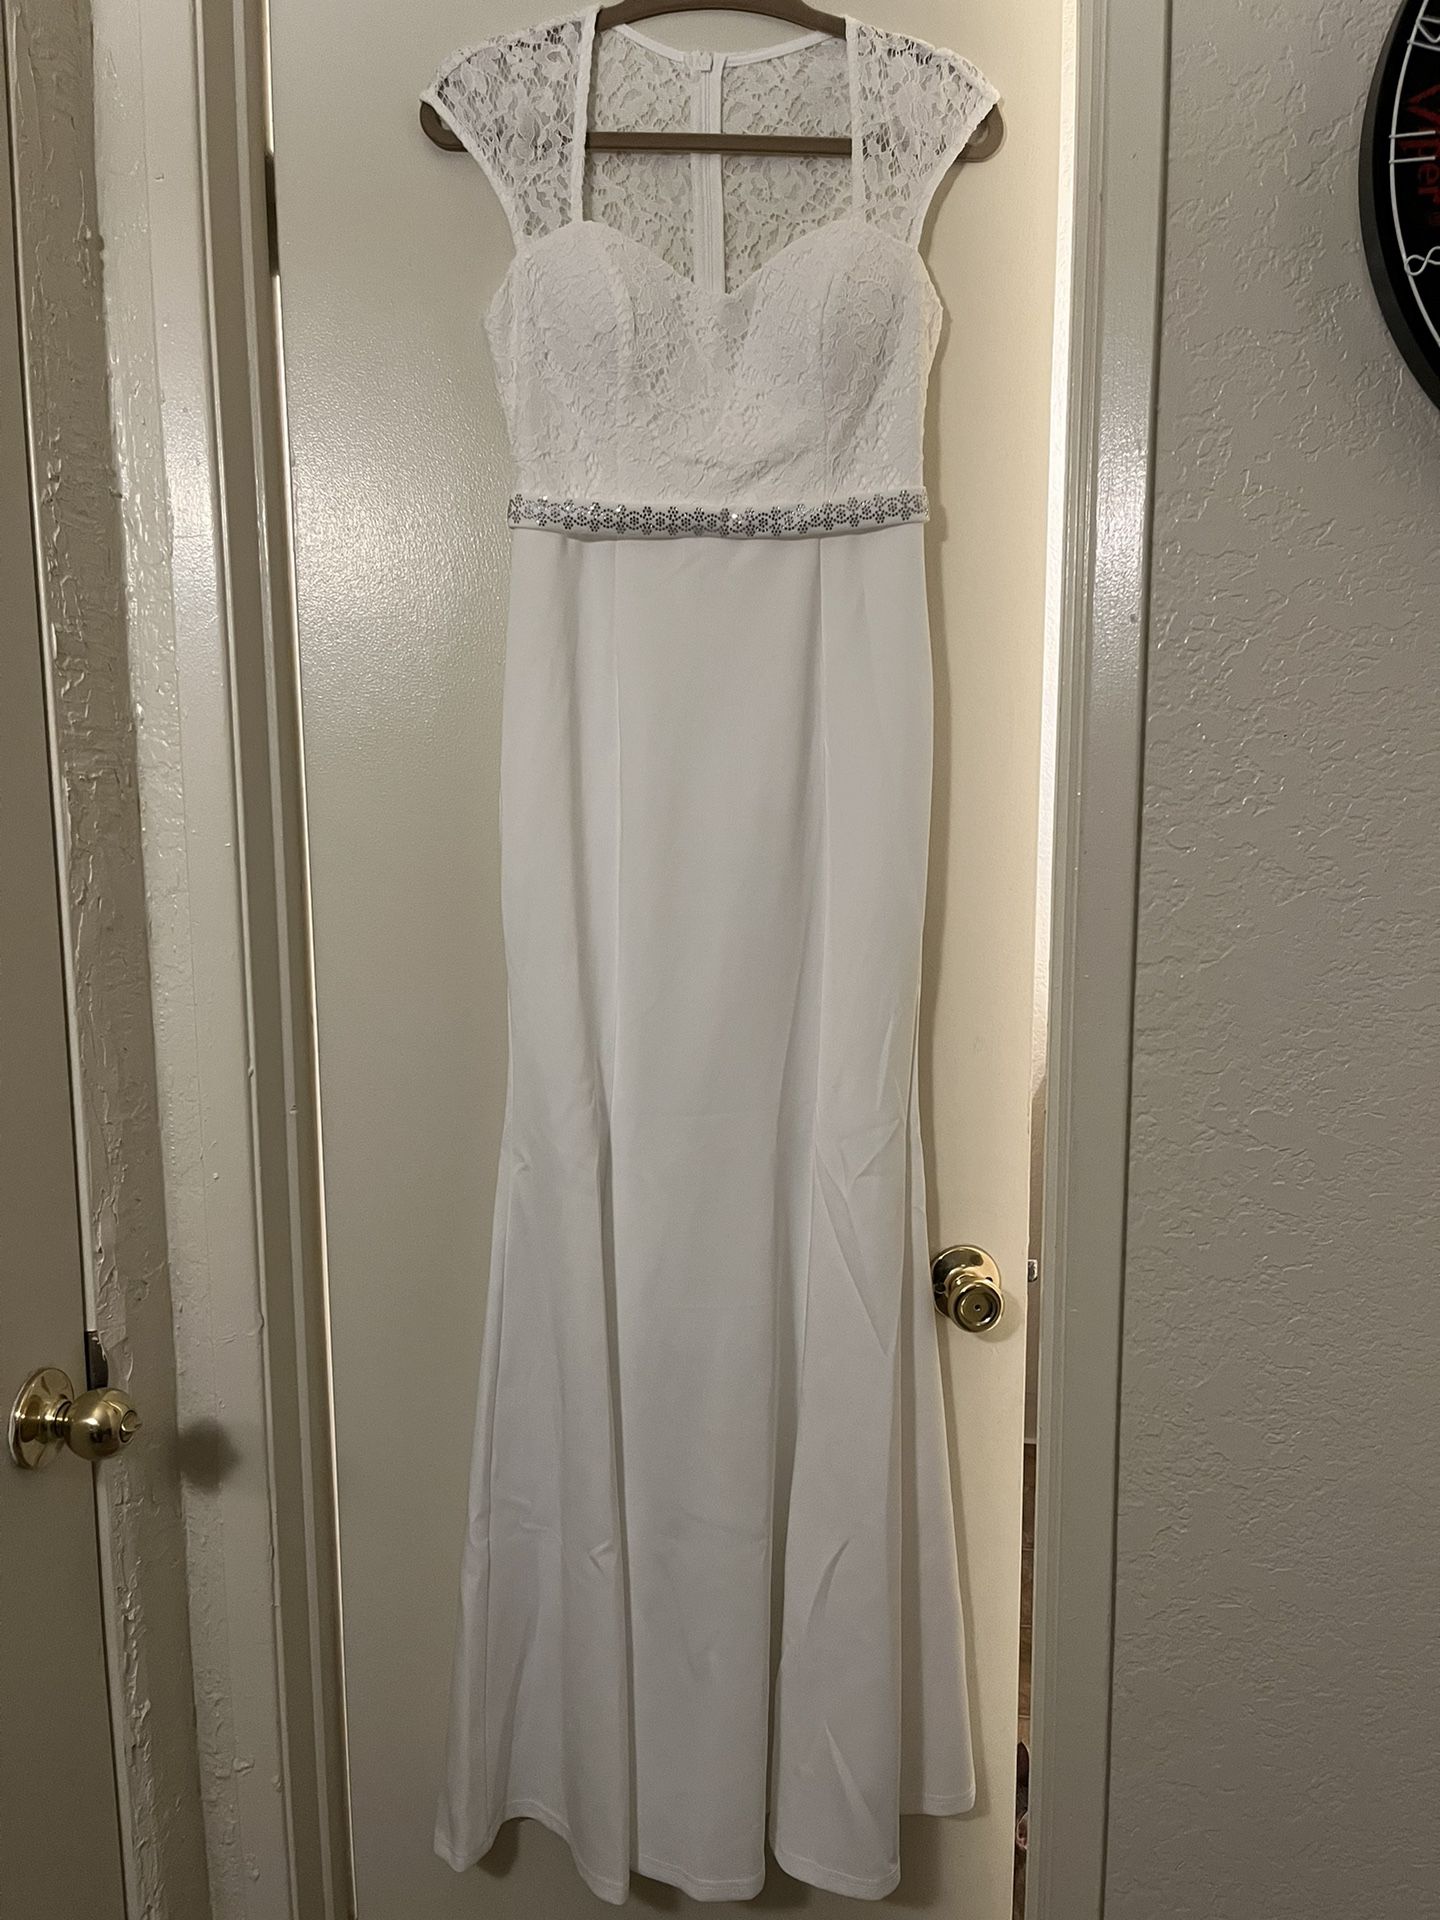 Shein Dress, White, Size 4